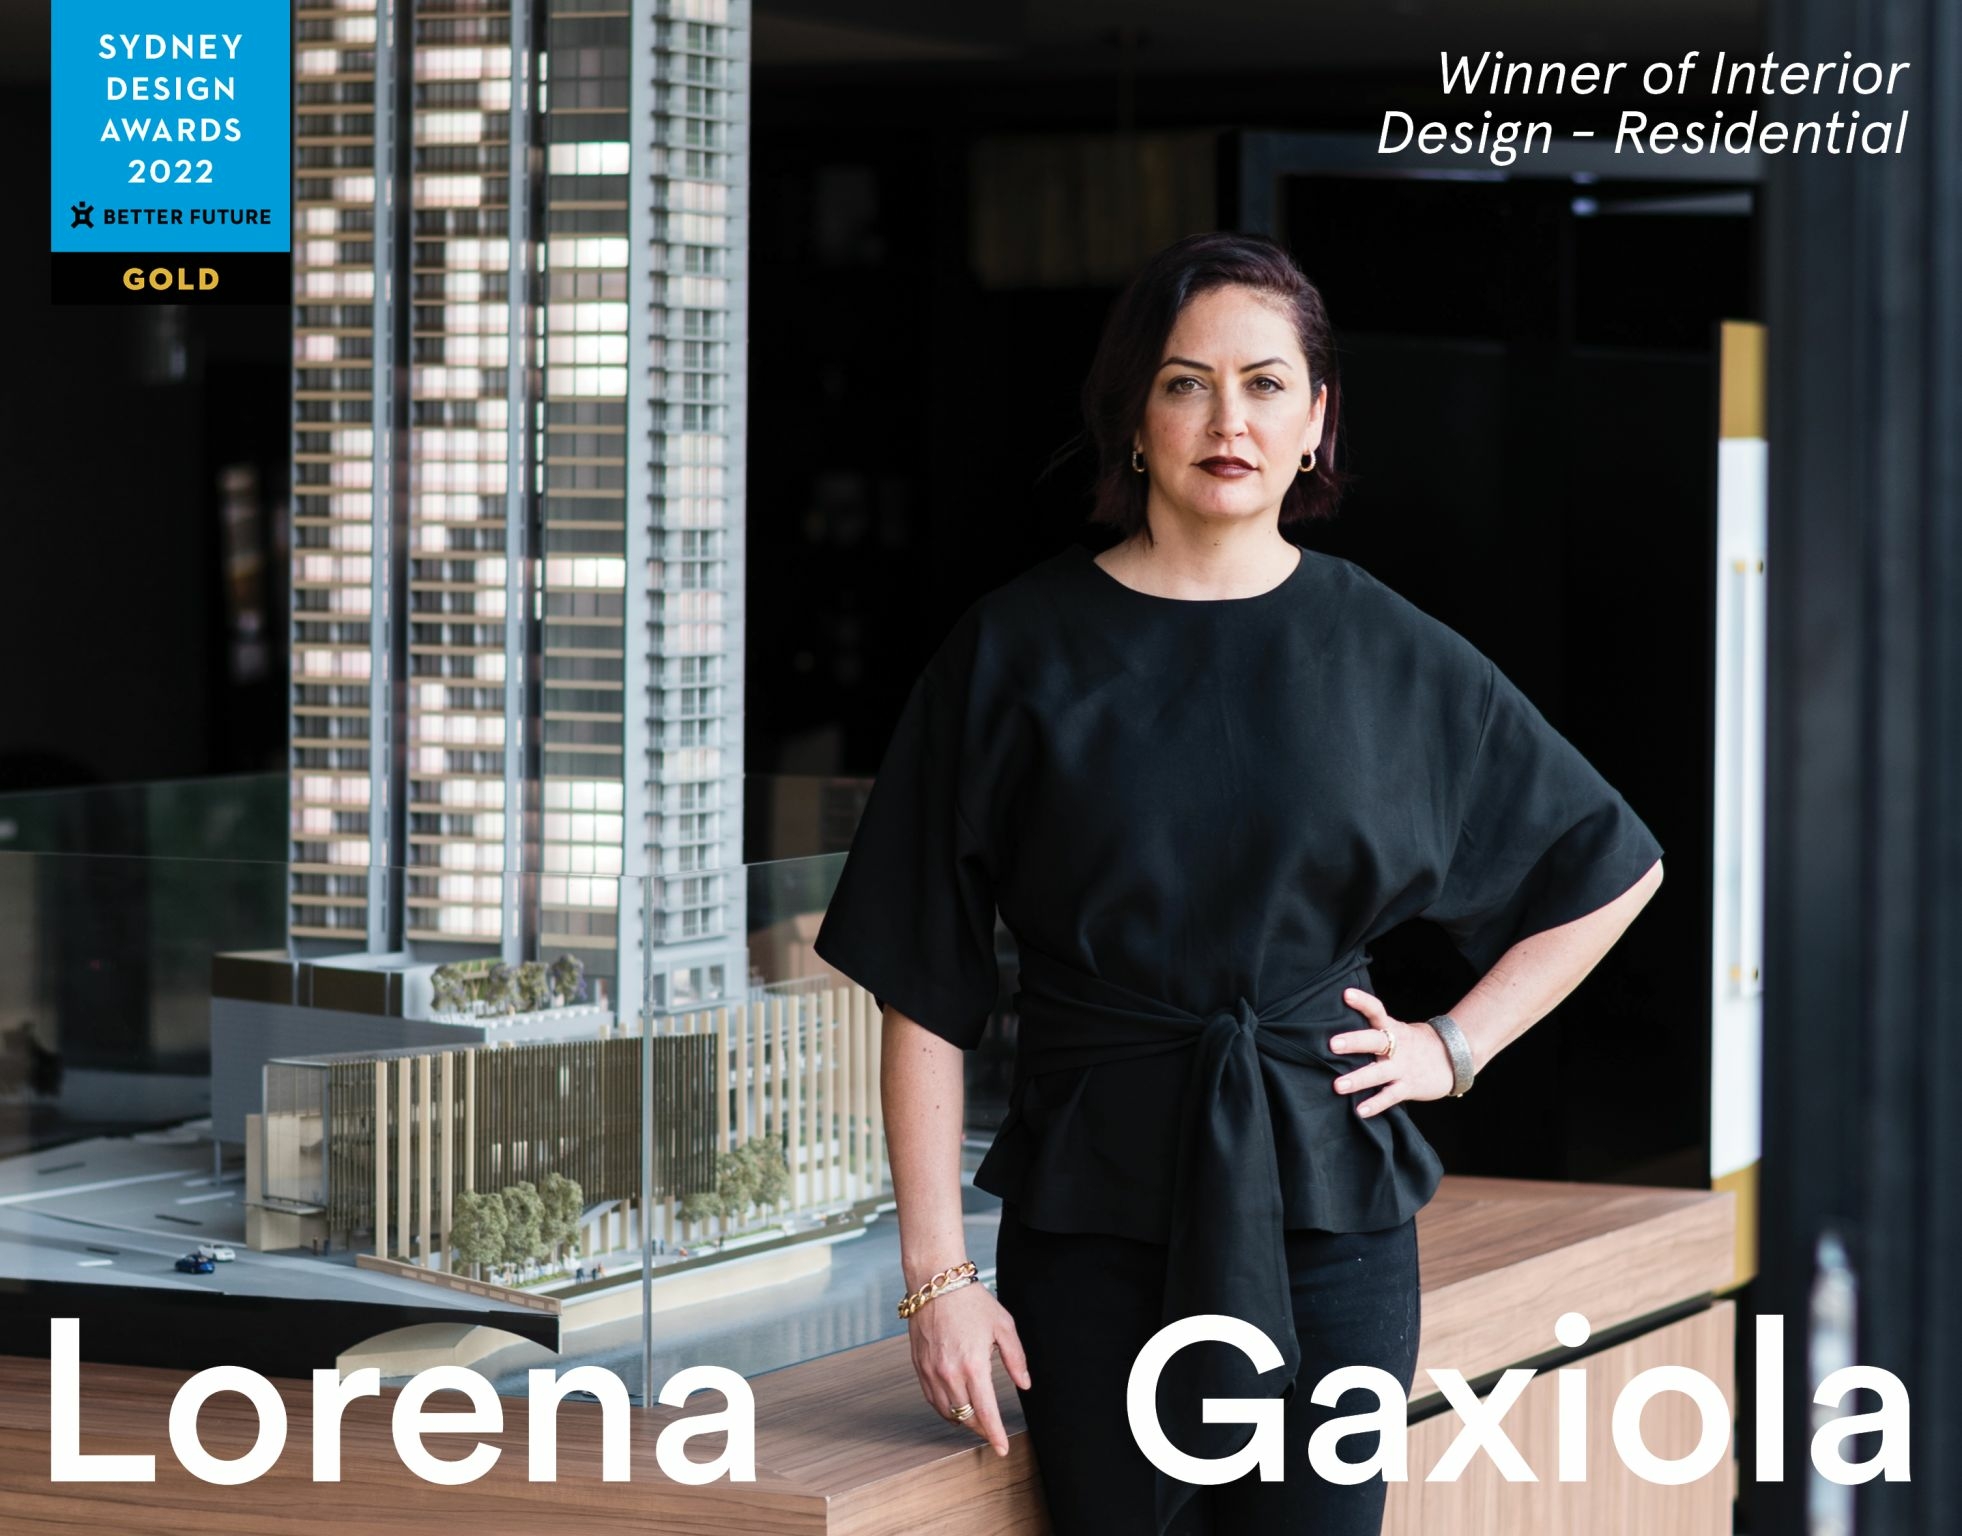 The art beyond property design - with Lorena Gaxiola